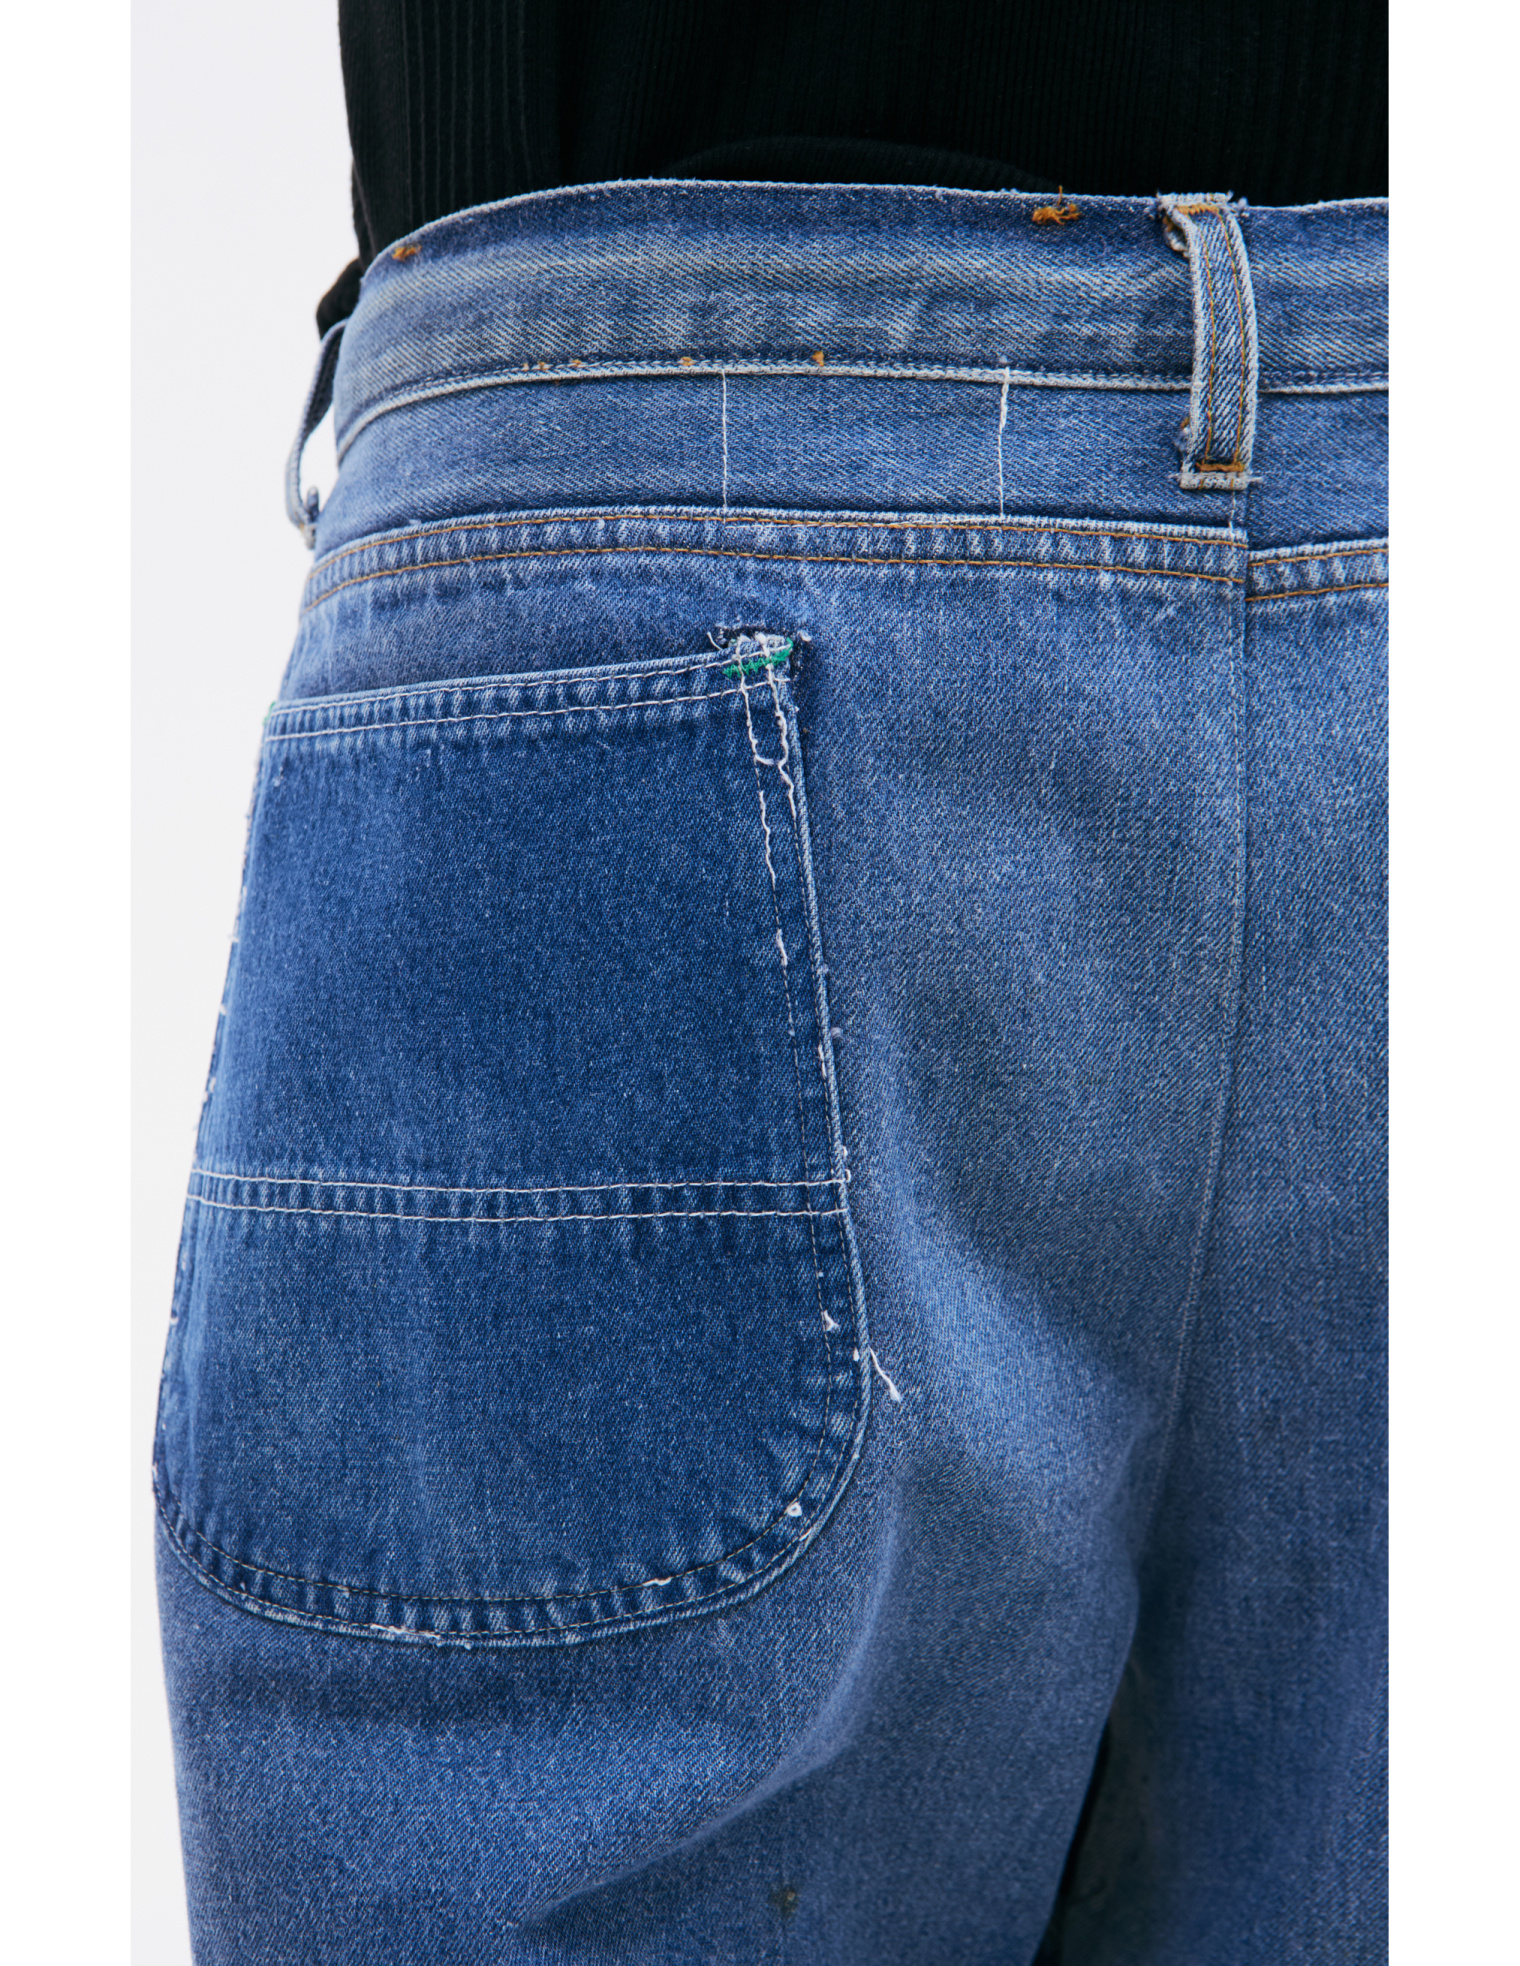 Greg Lauren Blue jeans